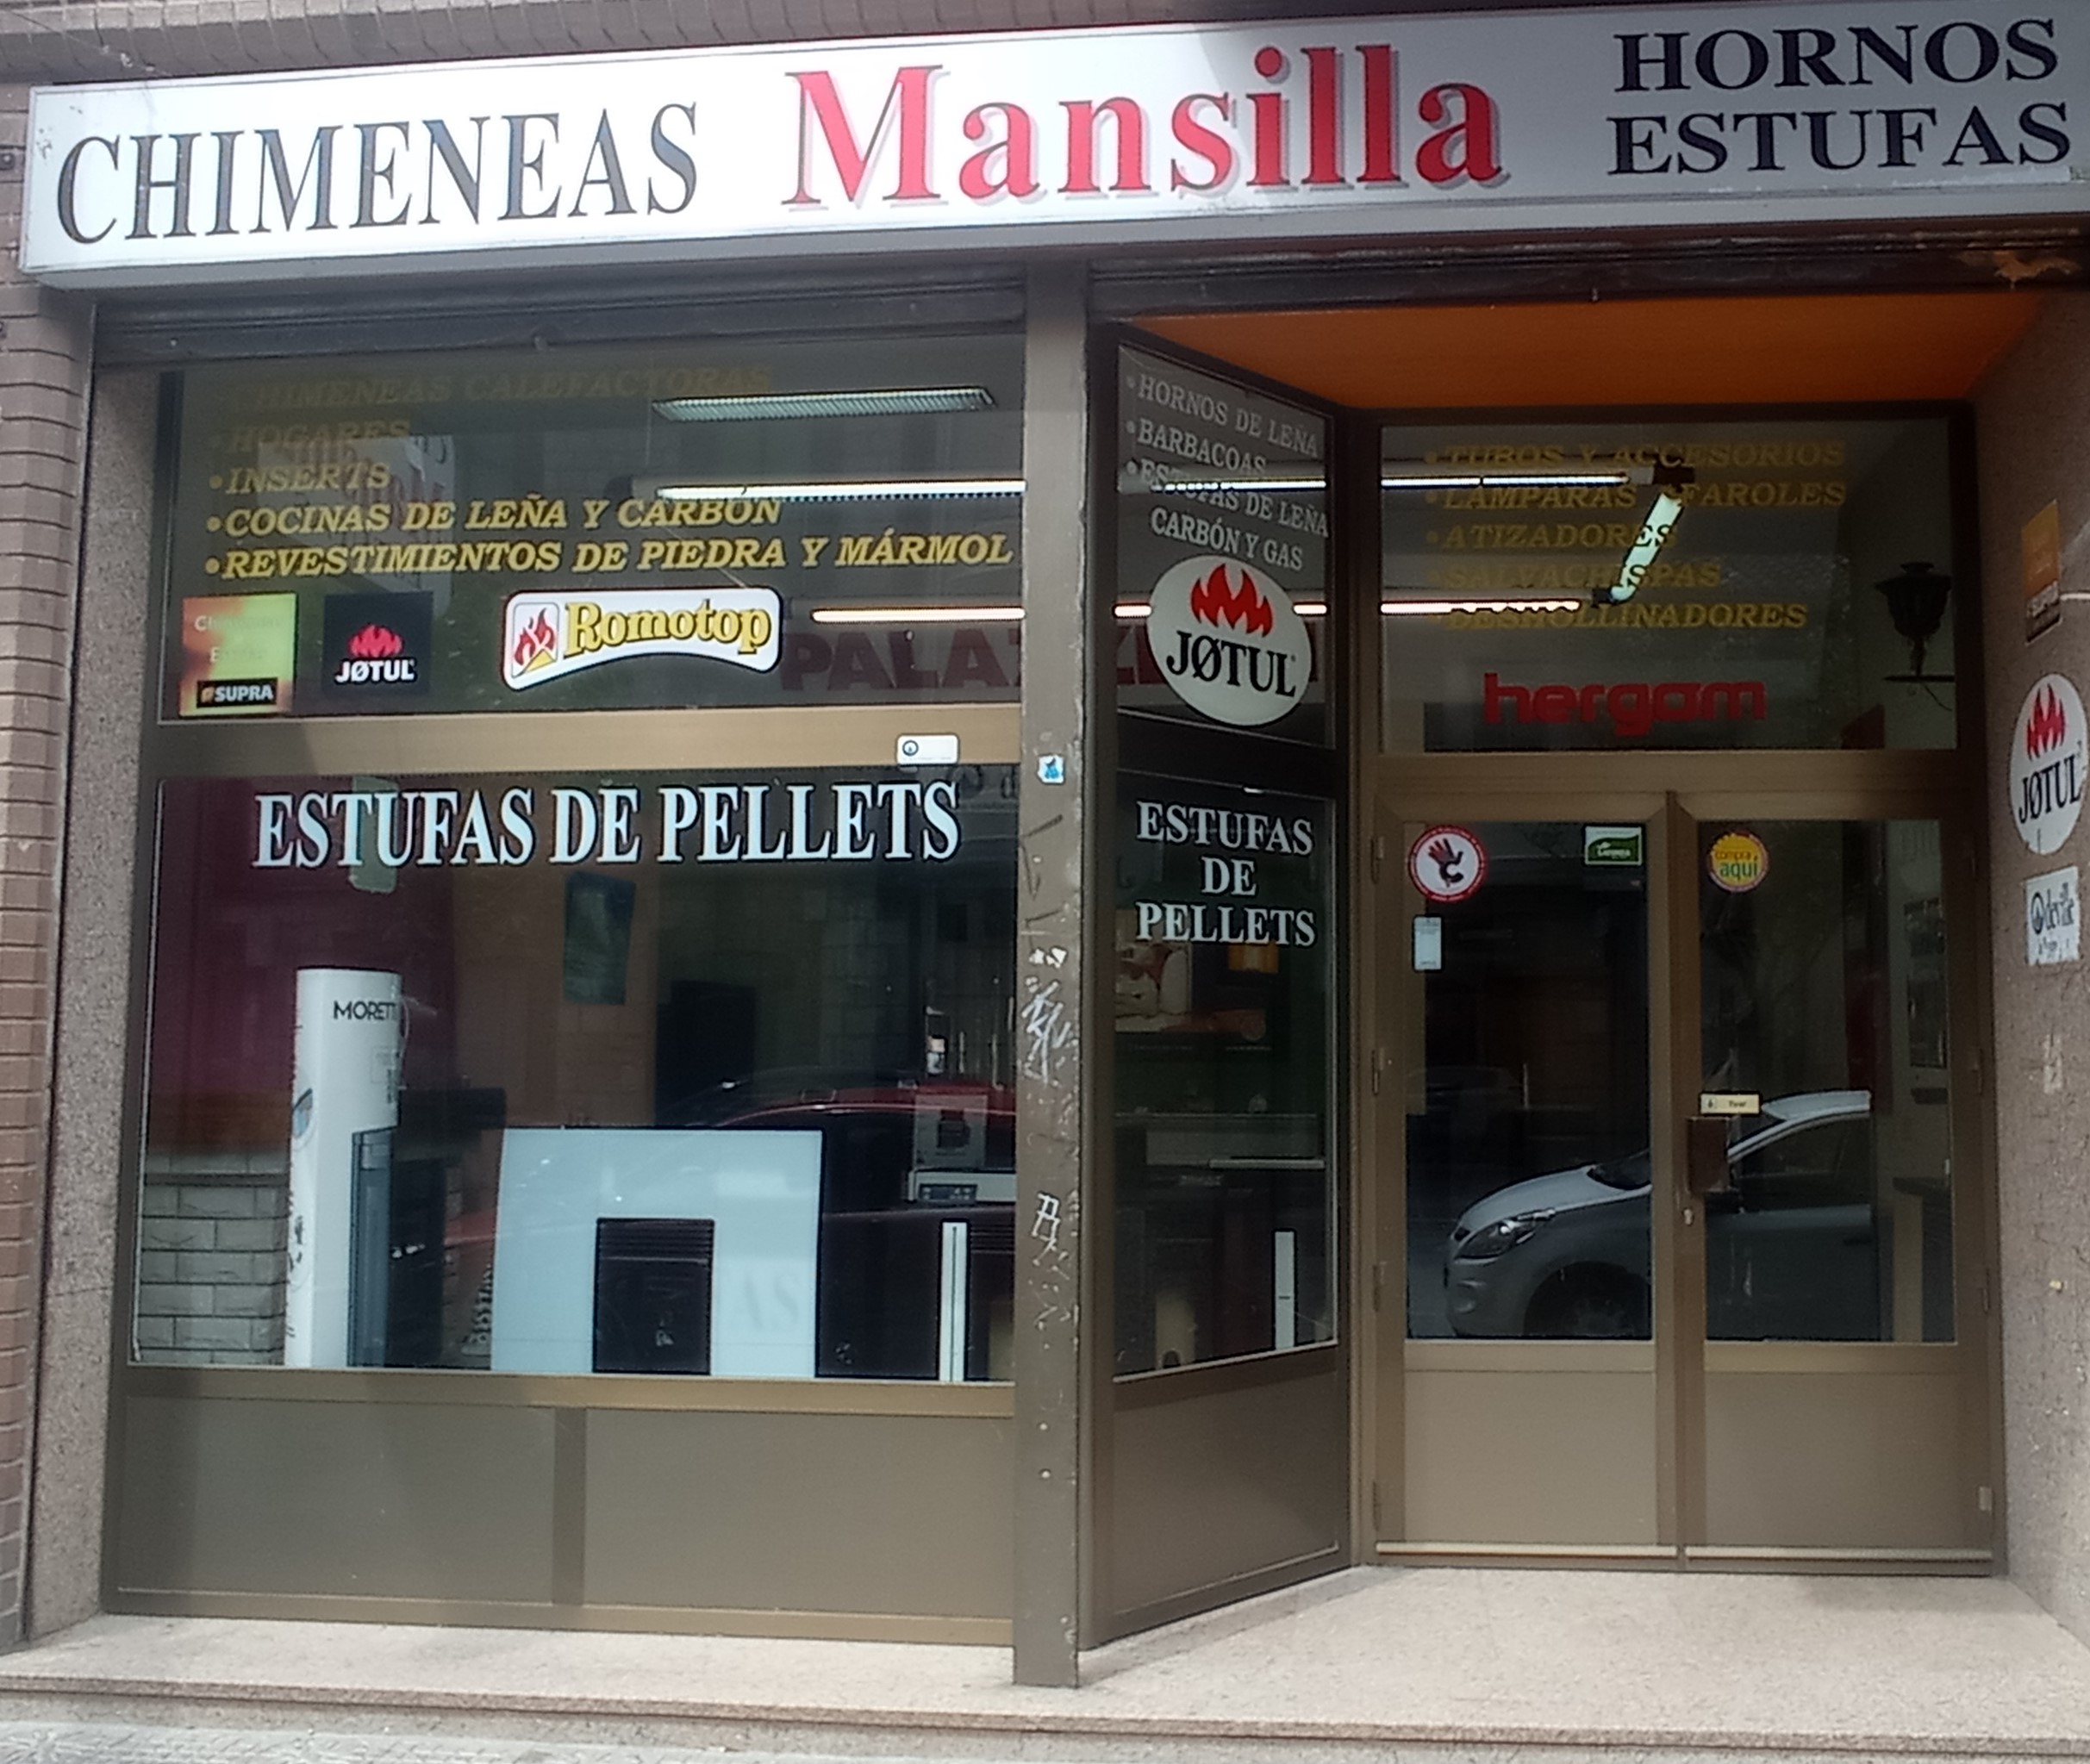 Chimeneas Mansilla Hornos-estufas